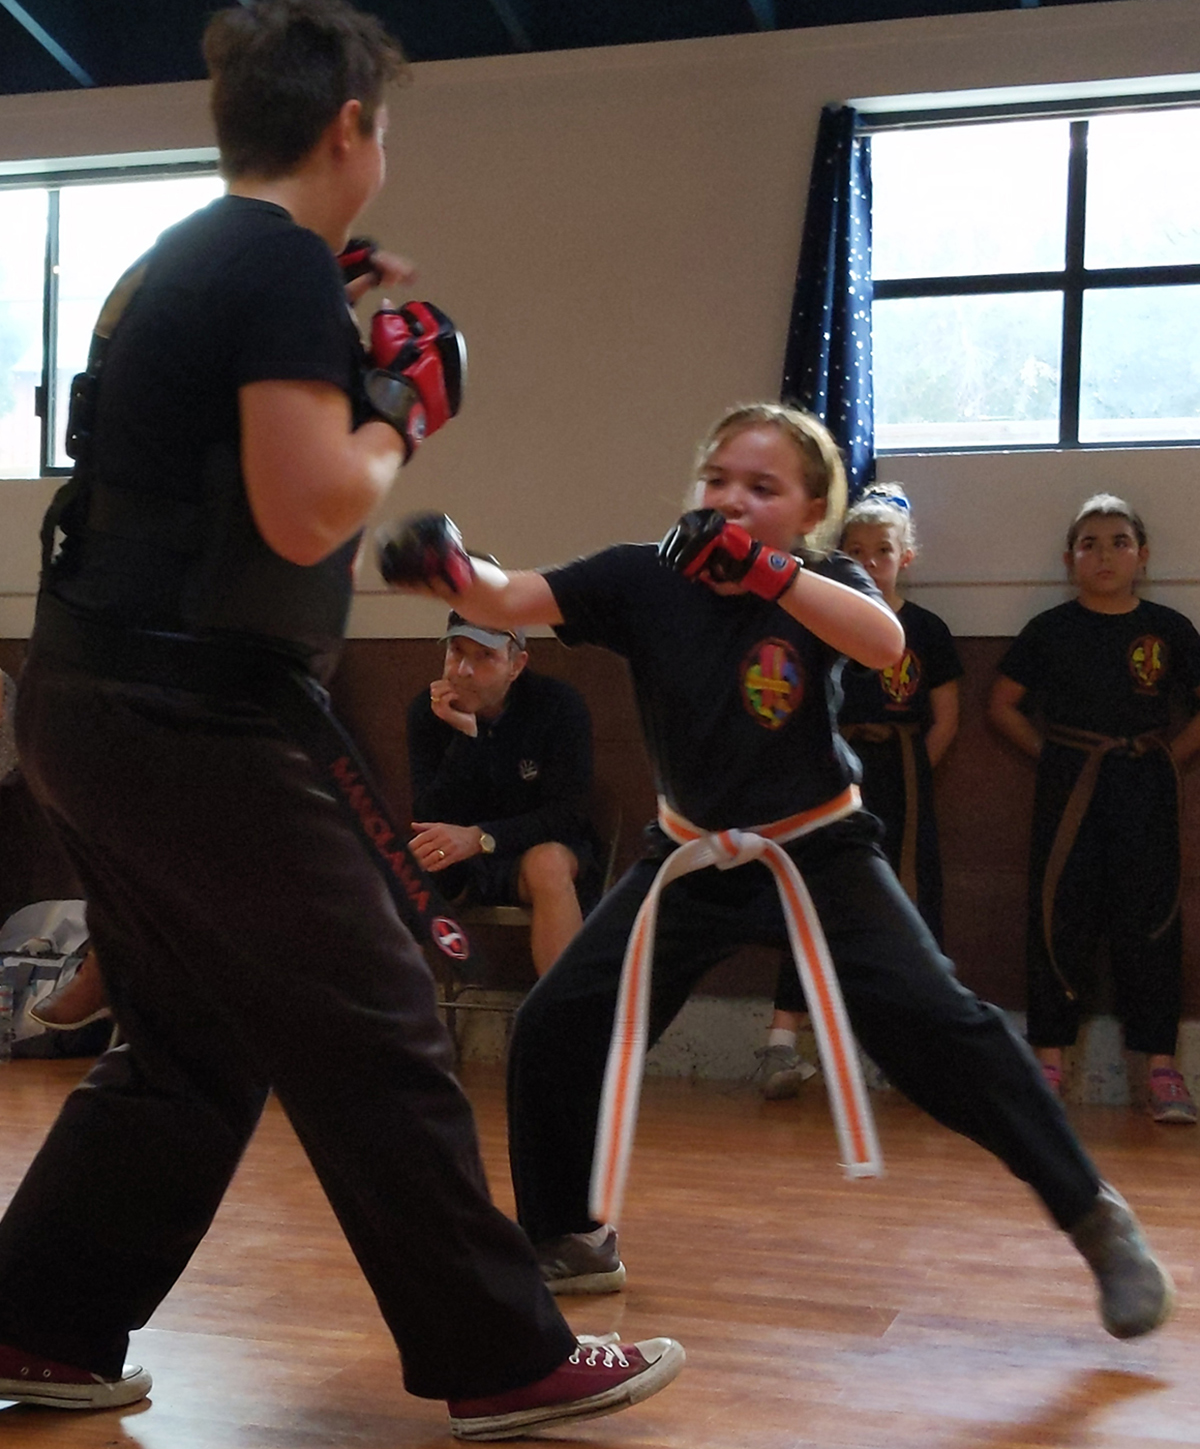 child martial artist self-defense moves